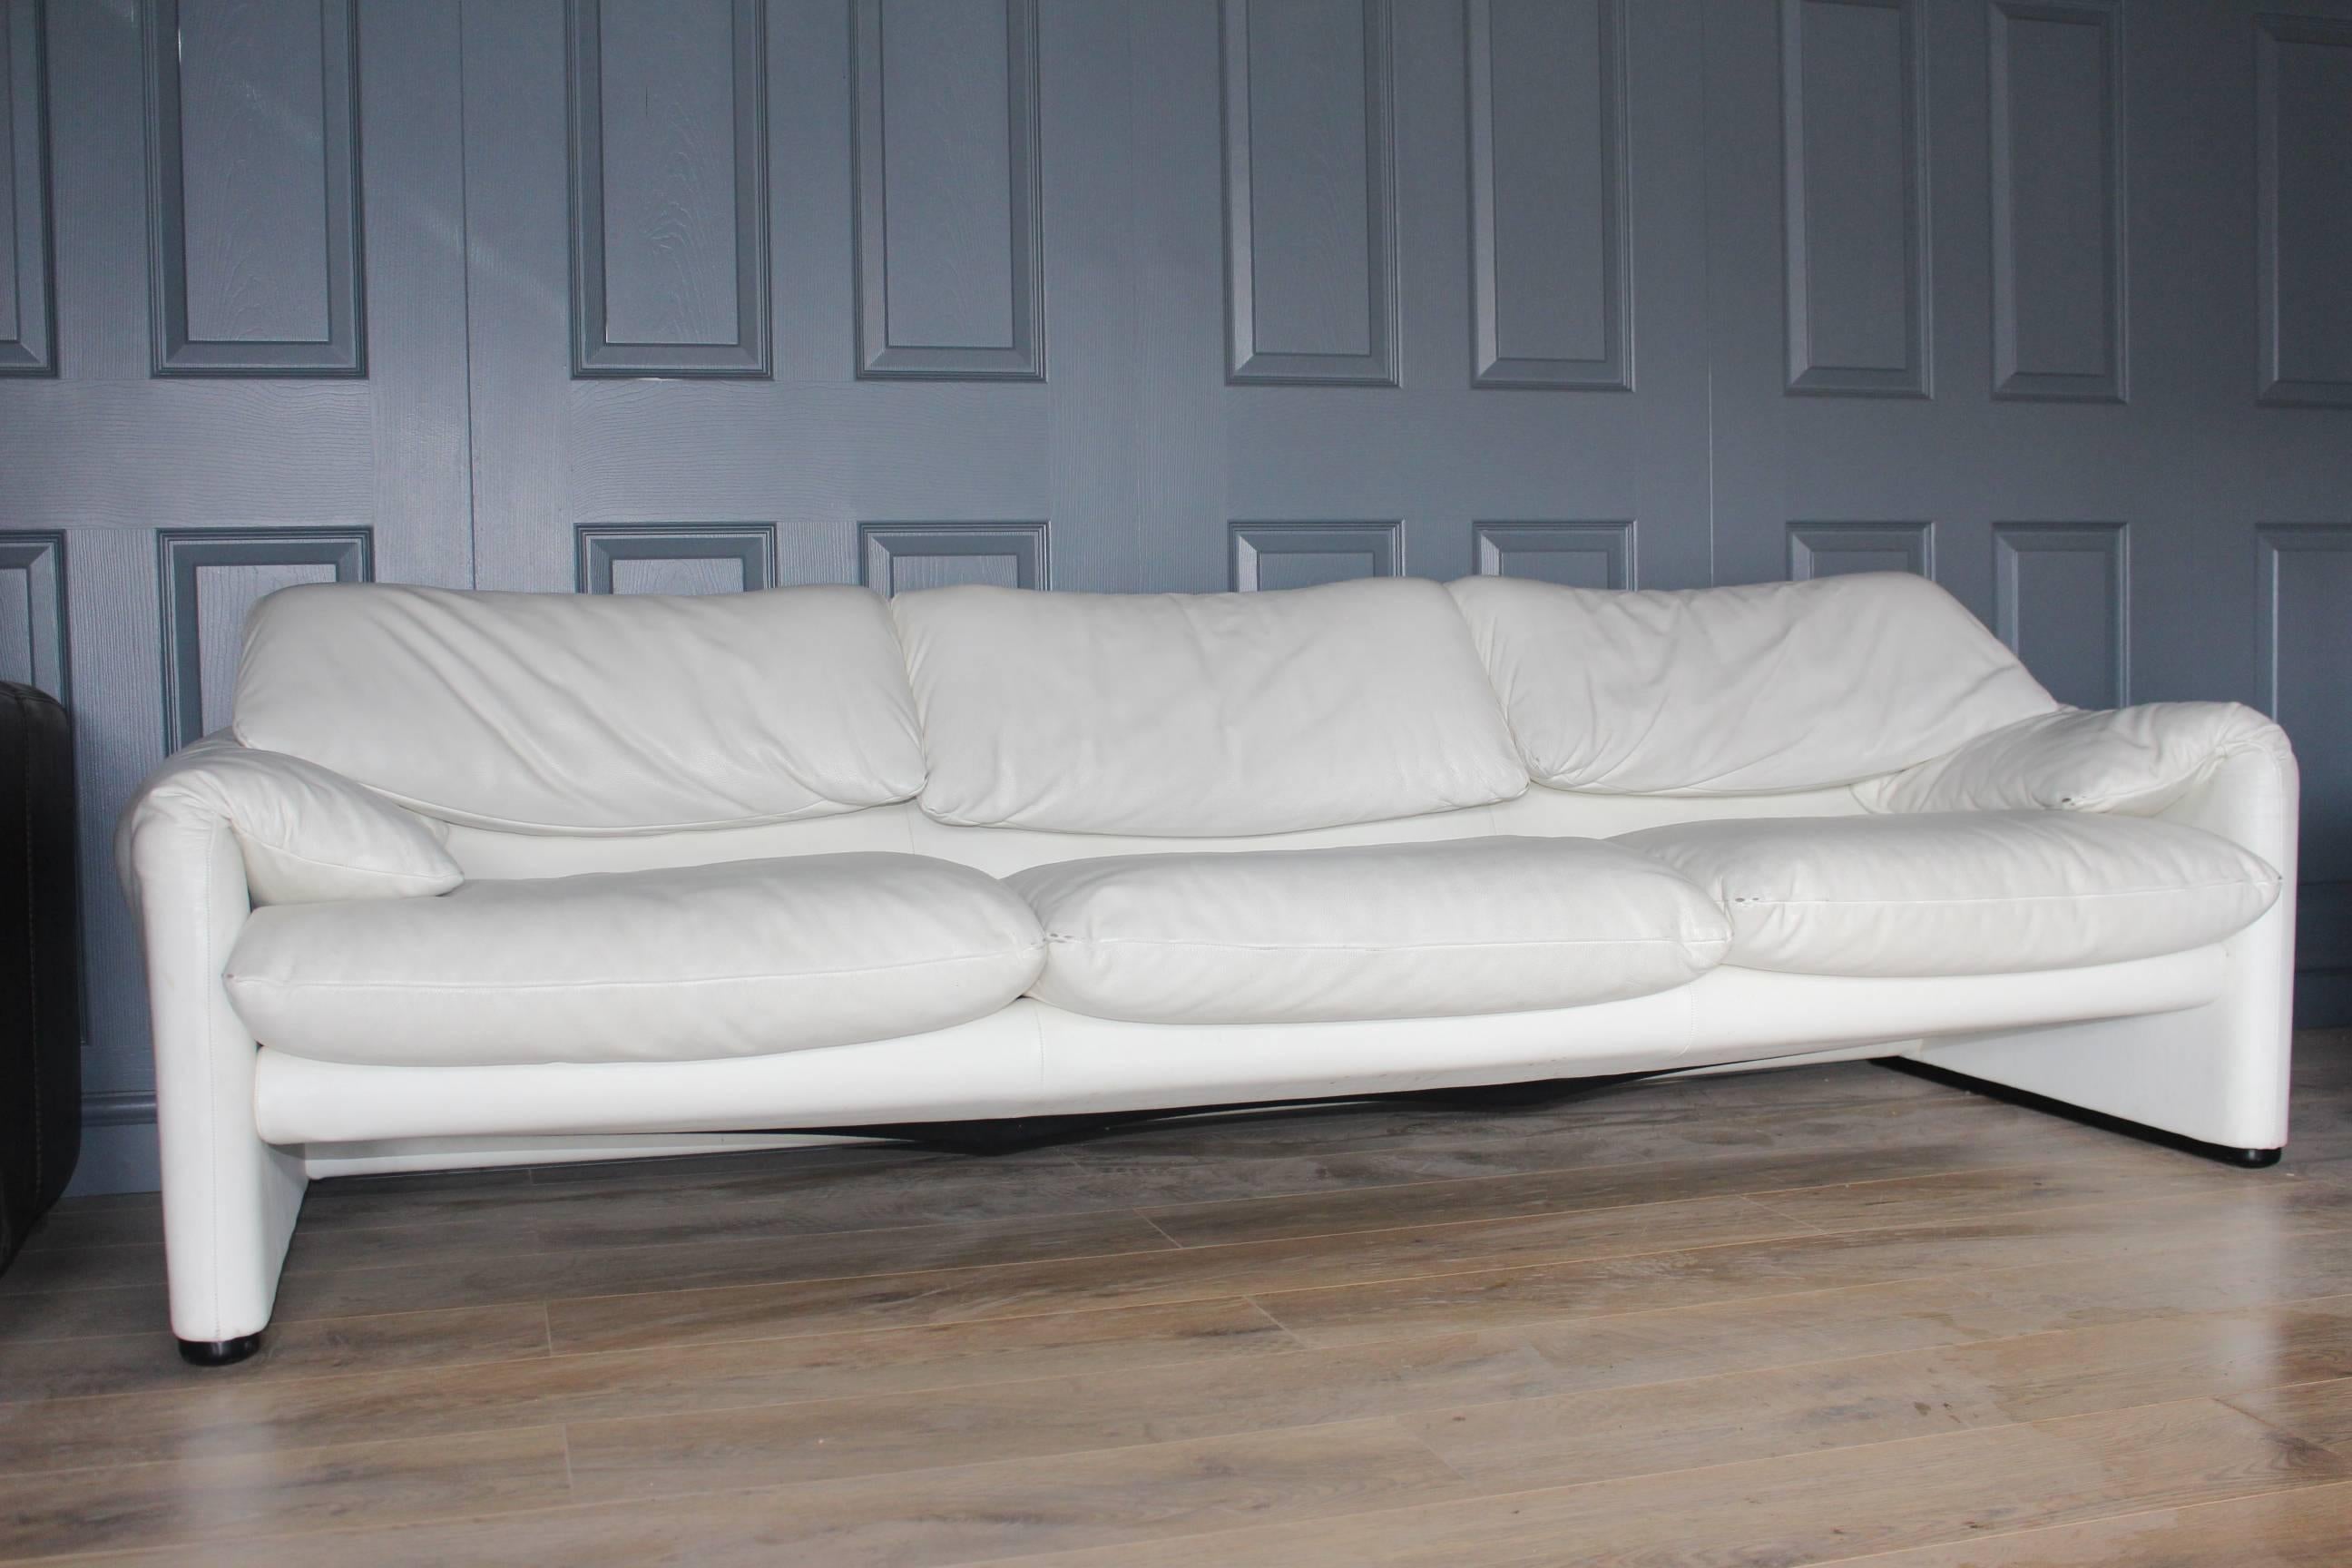 Swiss Designer Cassina Maralunga by Vico Magistretti White Leather Sofa